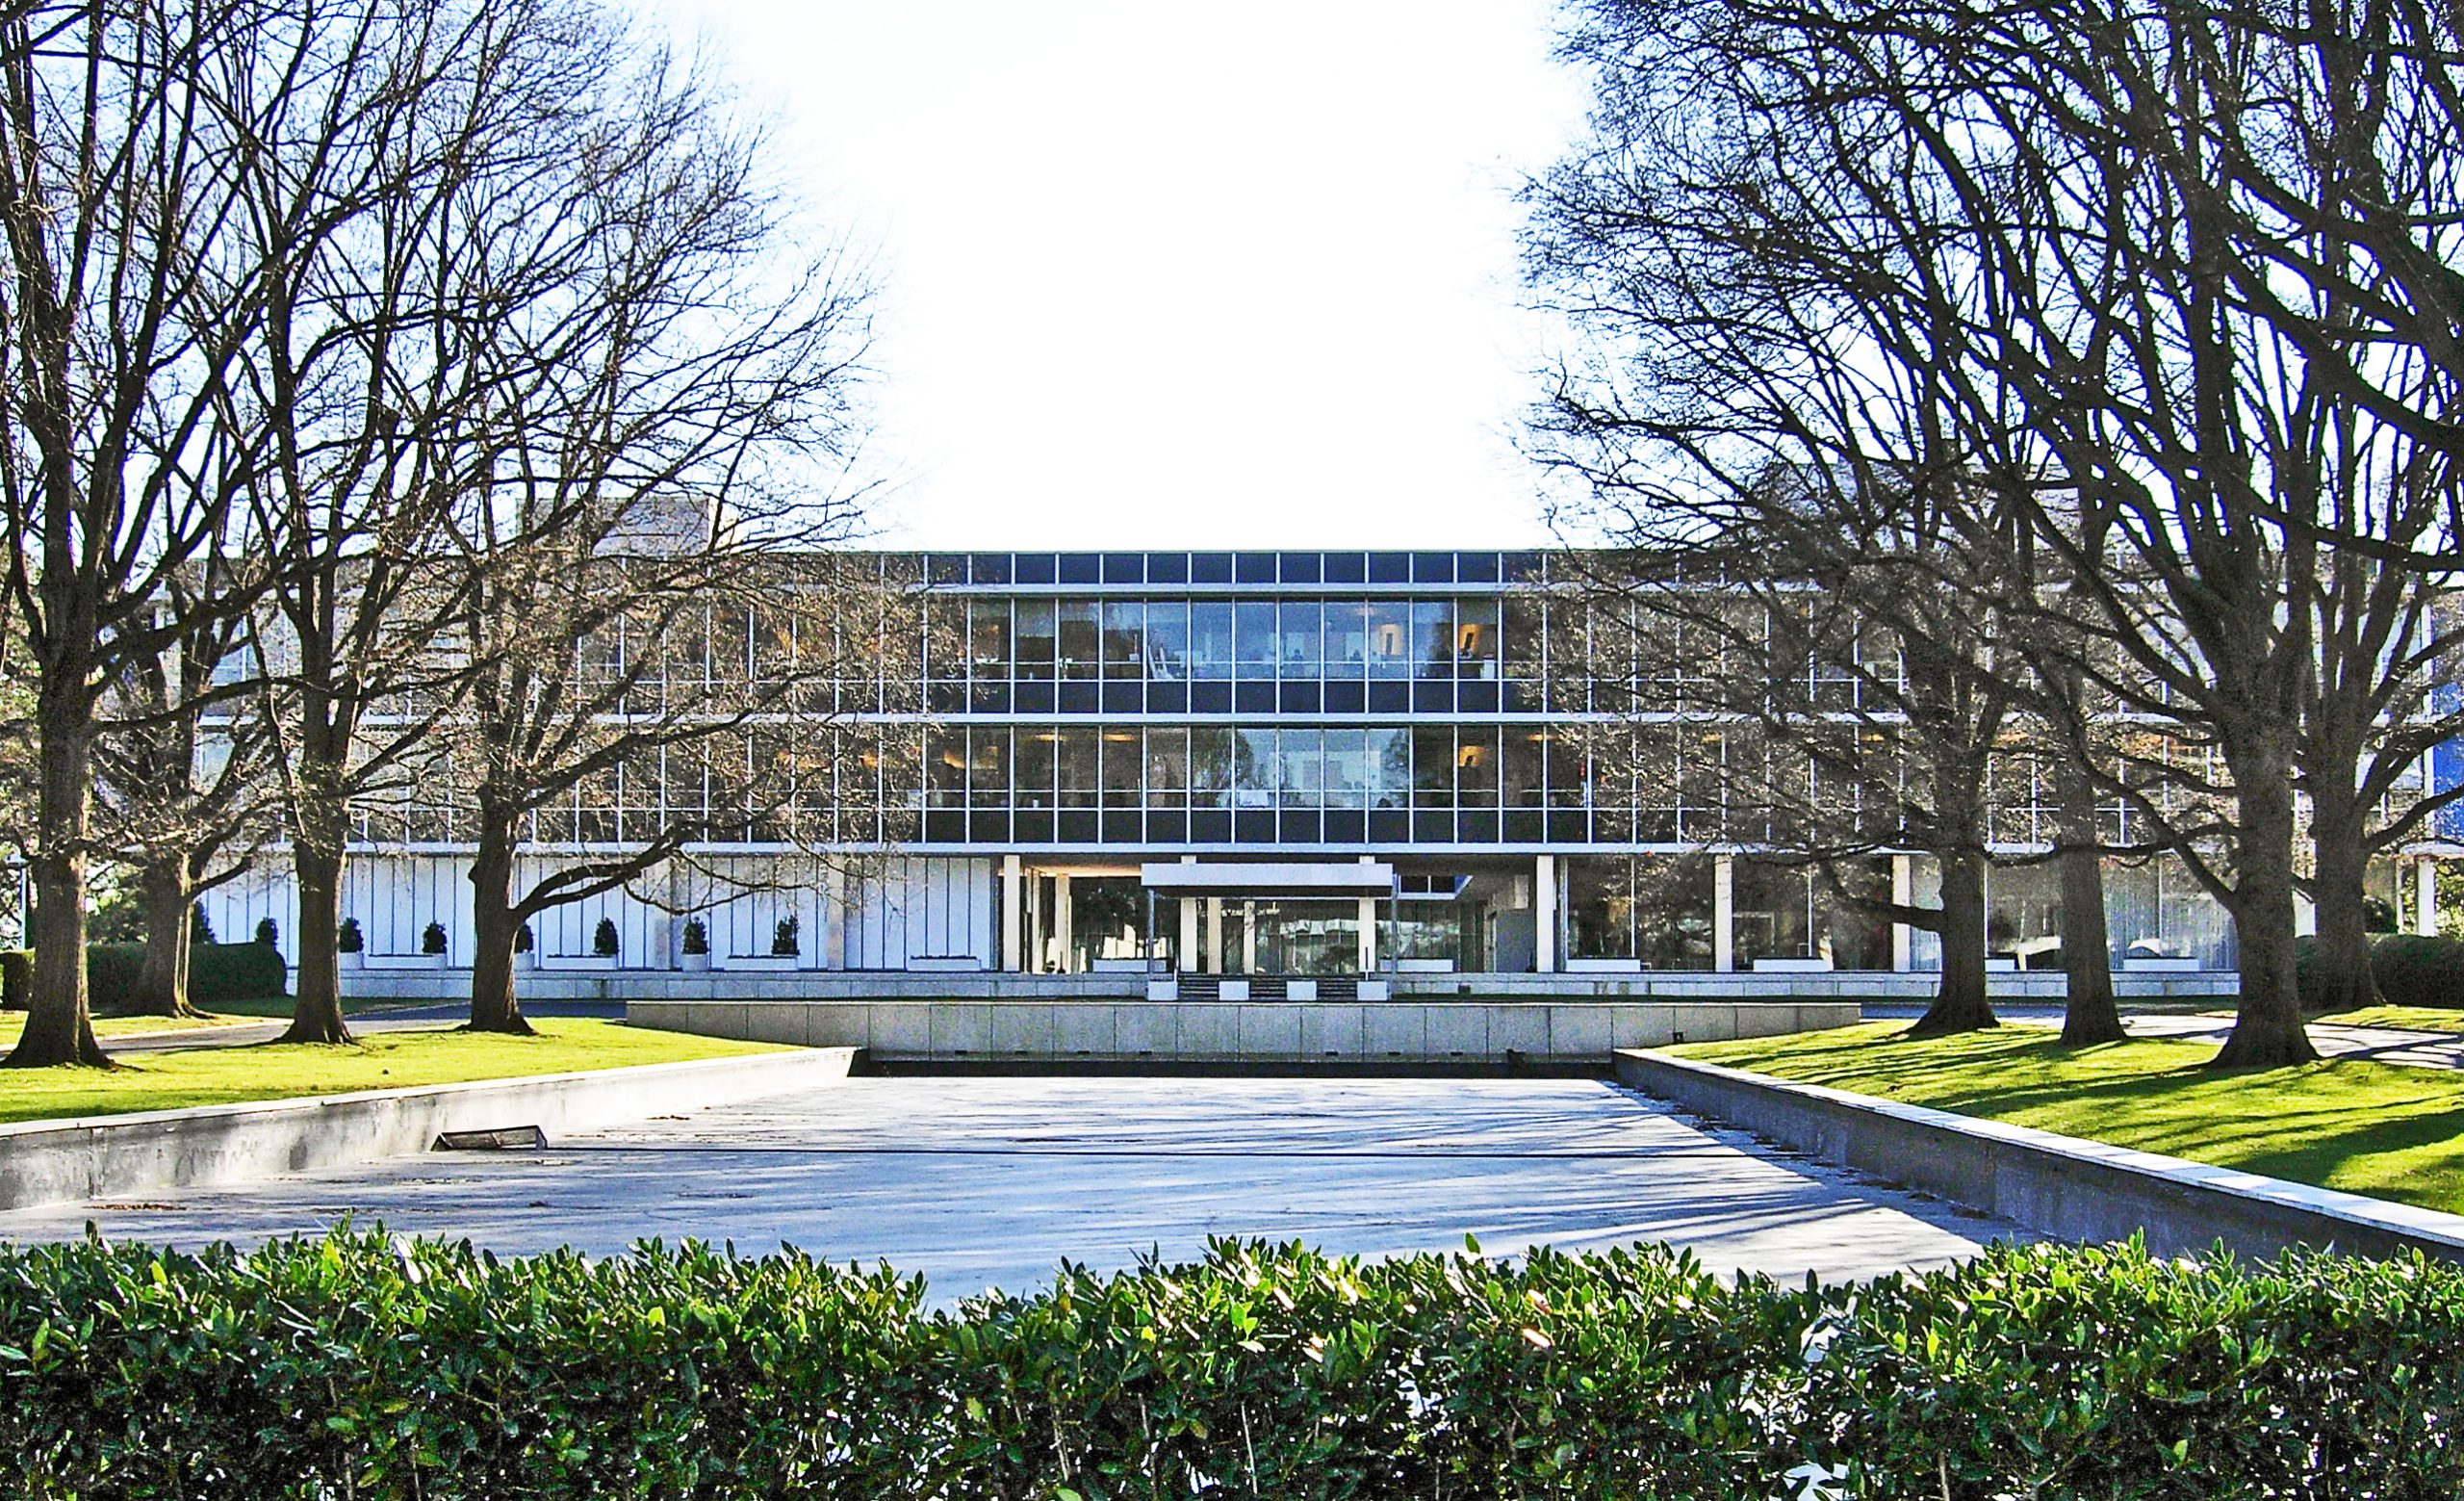 Reynolds Metals Company International Headquarters, 2012, Henrico County, DHR ID #043-0242